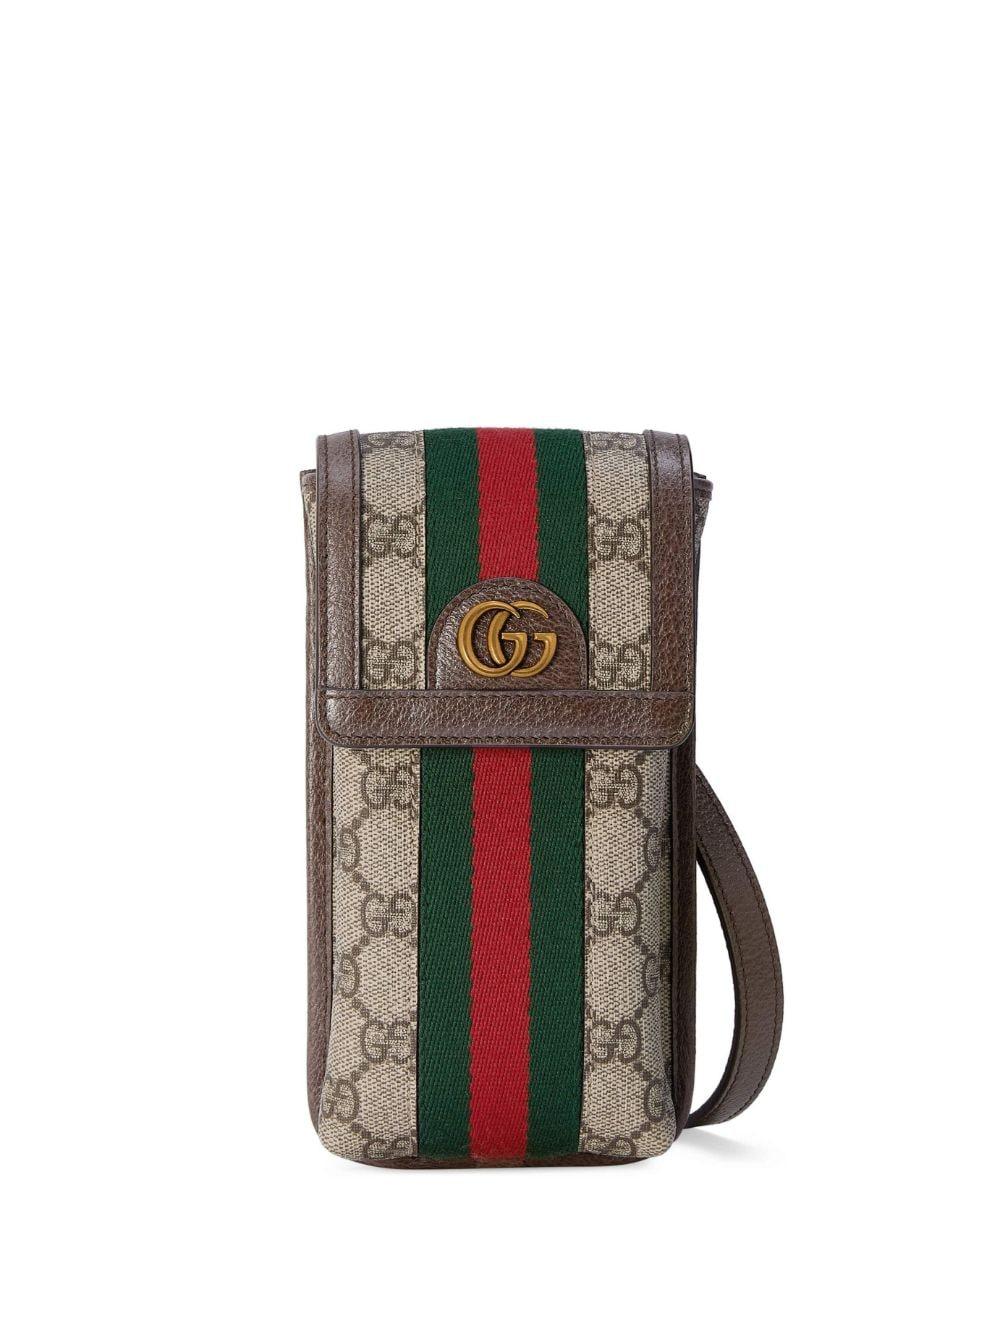 Gucci Ophidia GG Mini Shoulder Bag - Neutrals